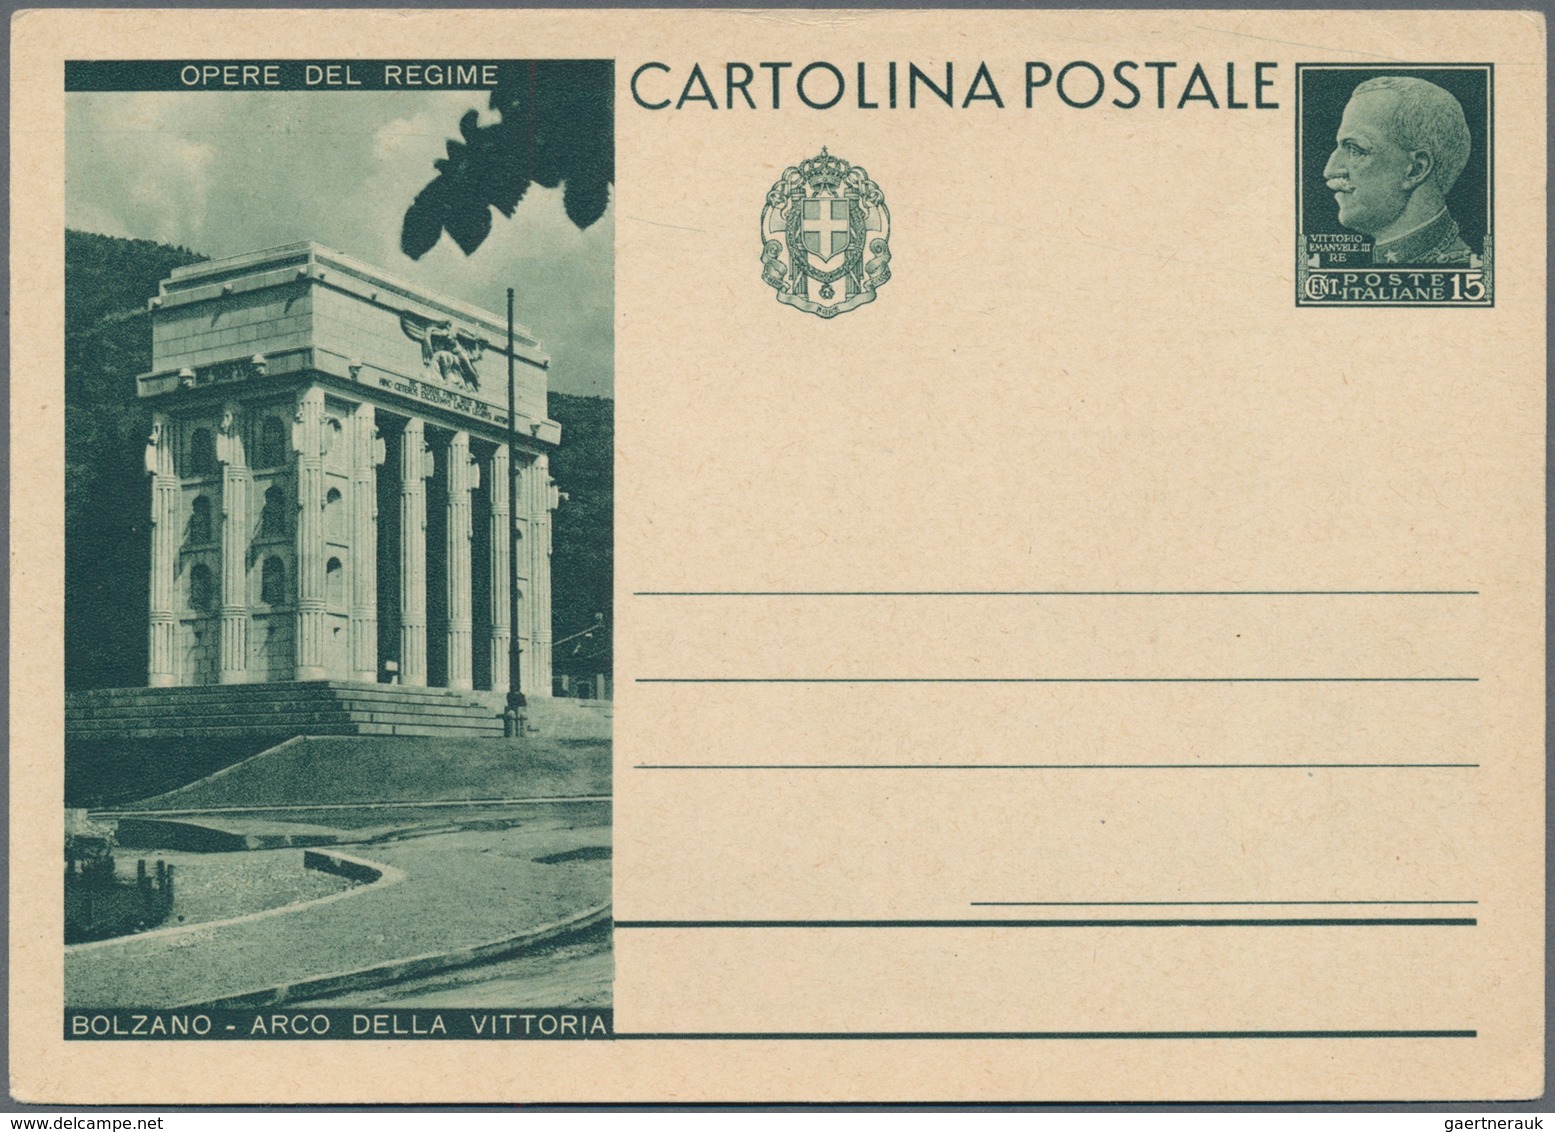 Italien - Ganzsachen: 1933, "OPERE DEL REGIME" (w/o ROMA) 15 c green postal stationery, large vignet